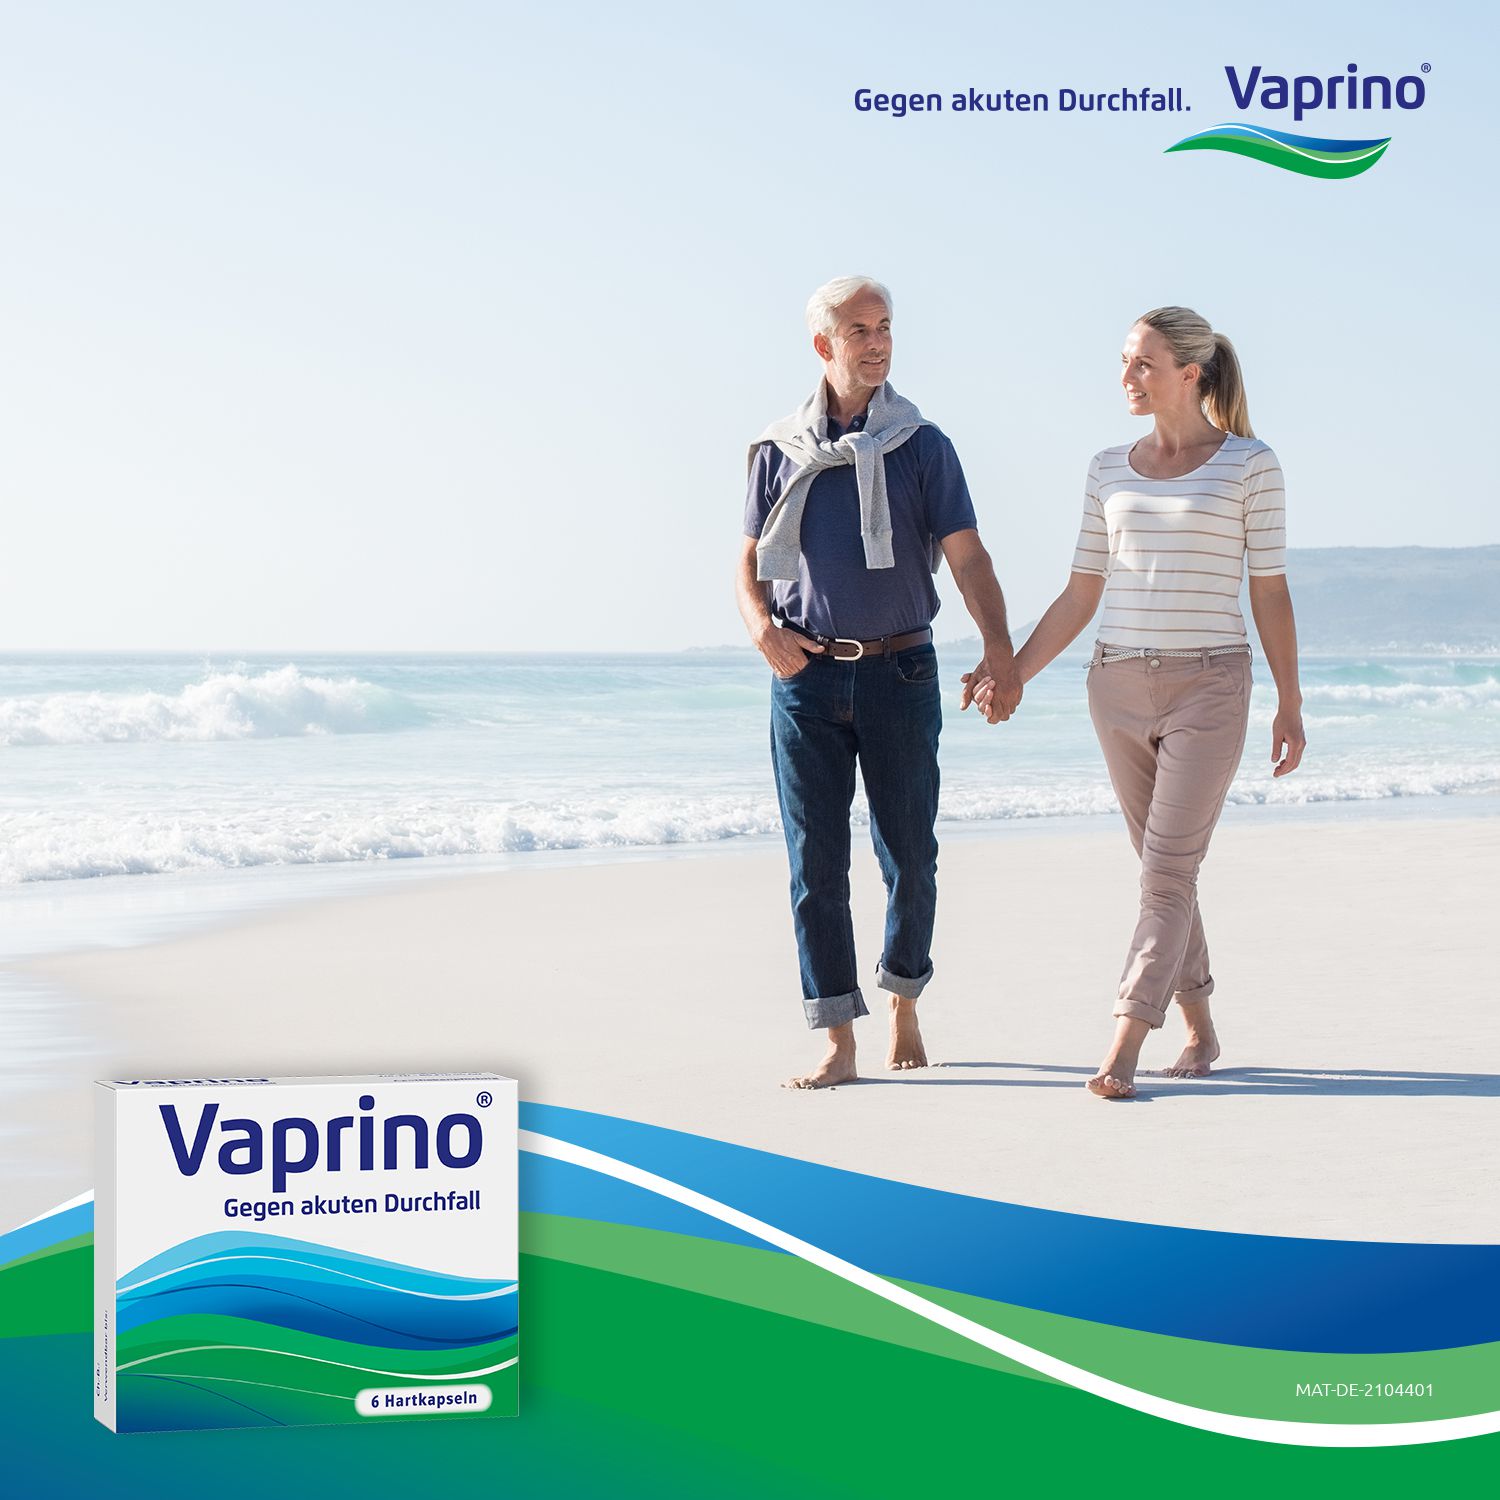 VAPRINO 100 mg Hartkapseln  mit dem Wirkstoff Racecadotril gegen akuten Durchfall